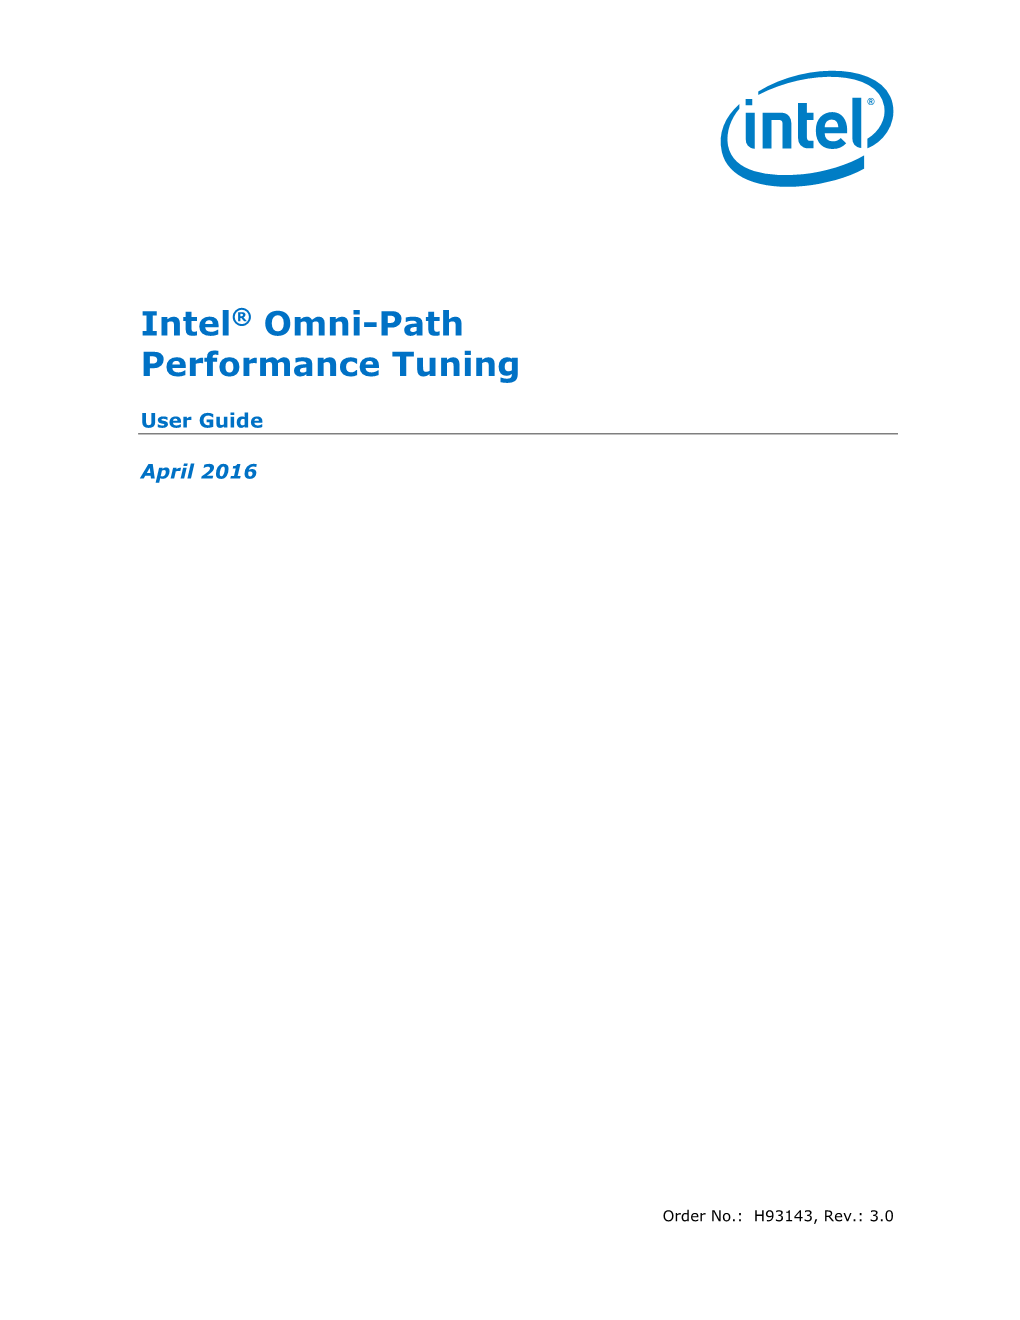 Intel® Omni-Path Performance Tuning